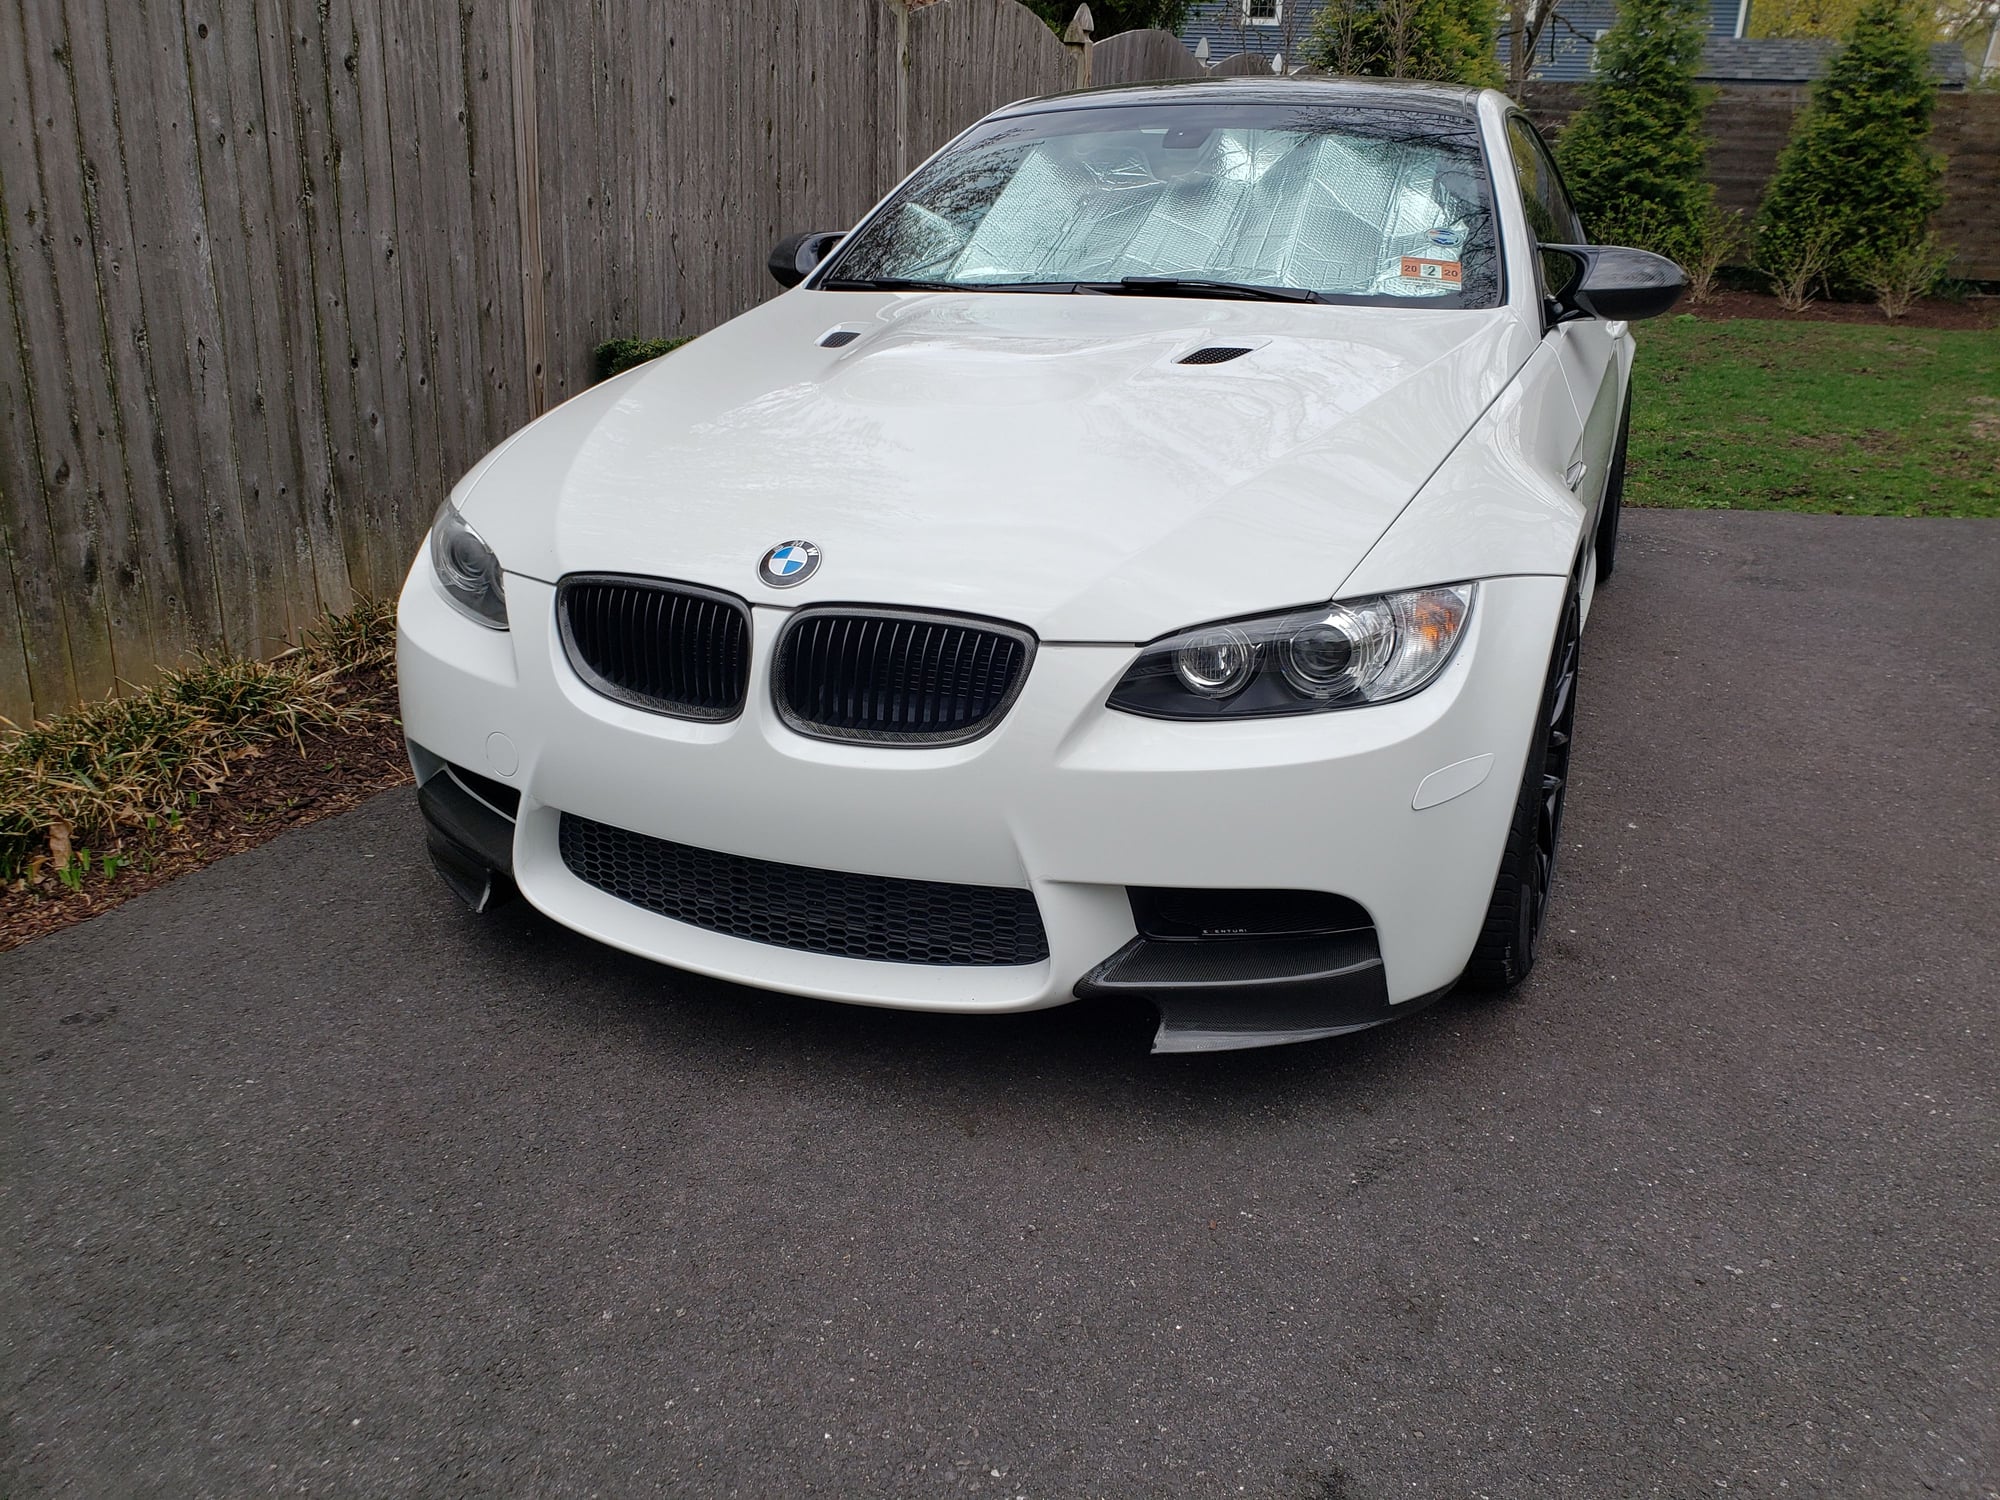 2013 BMW M3 - 2013 BMW e92 M3 duel clutch - Used - VIN WBSKG9C54DJ593404 - 29,200 Miles - 8 cyl - 2WD - Coupe - White - Haddonfield, NJ 08033, United States